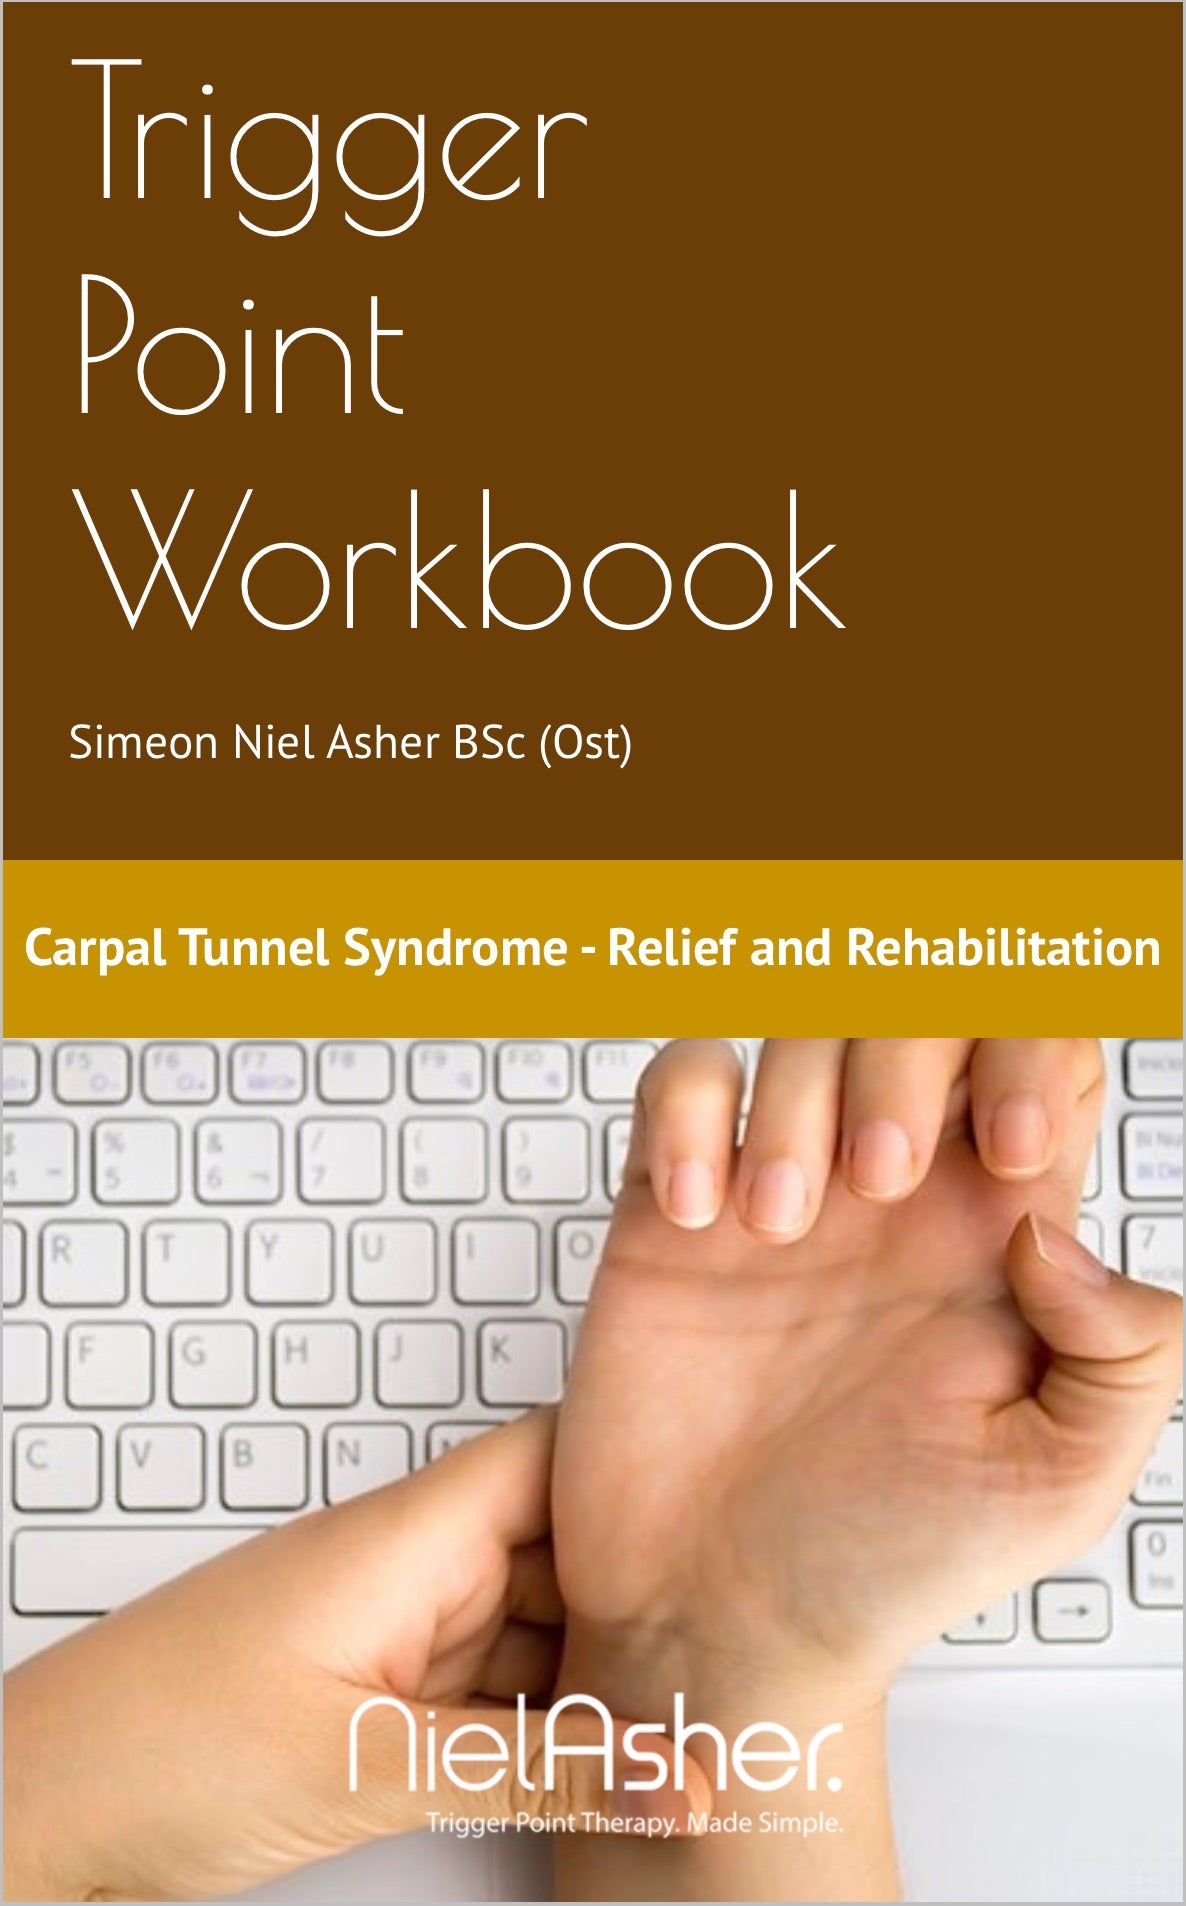 Carpal Tunnel Syndrome - Trigger Point Workbook (Digital Download)